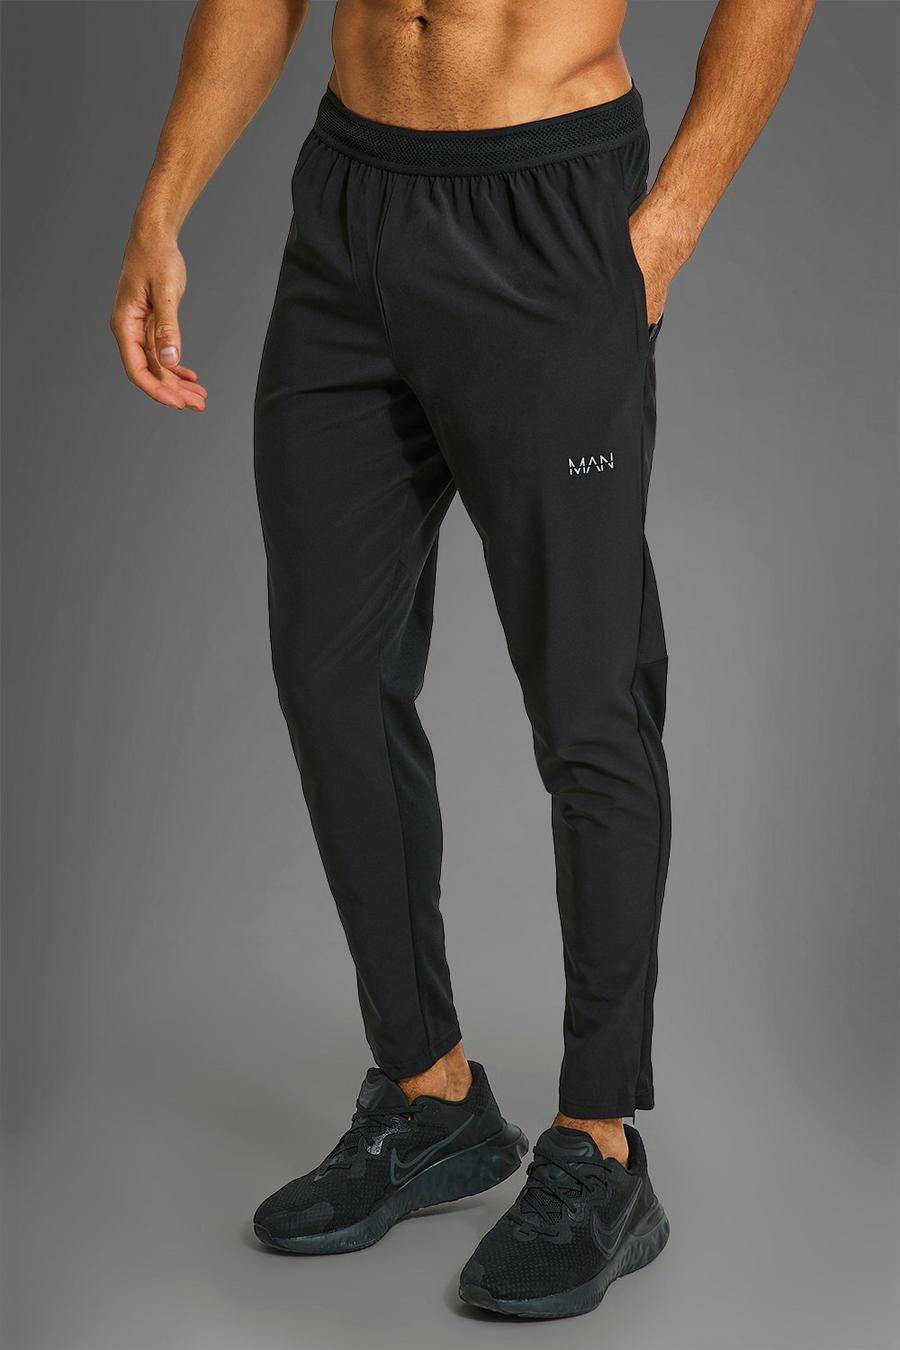 Pantaloni tuta Man Active Gym per alta performance con tasche e zip, Black nero image number 1